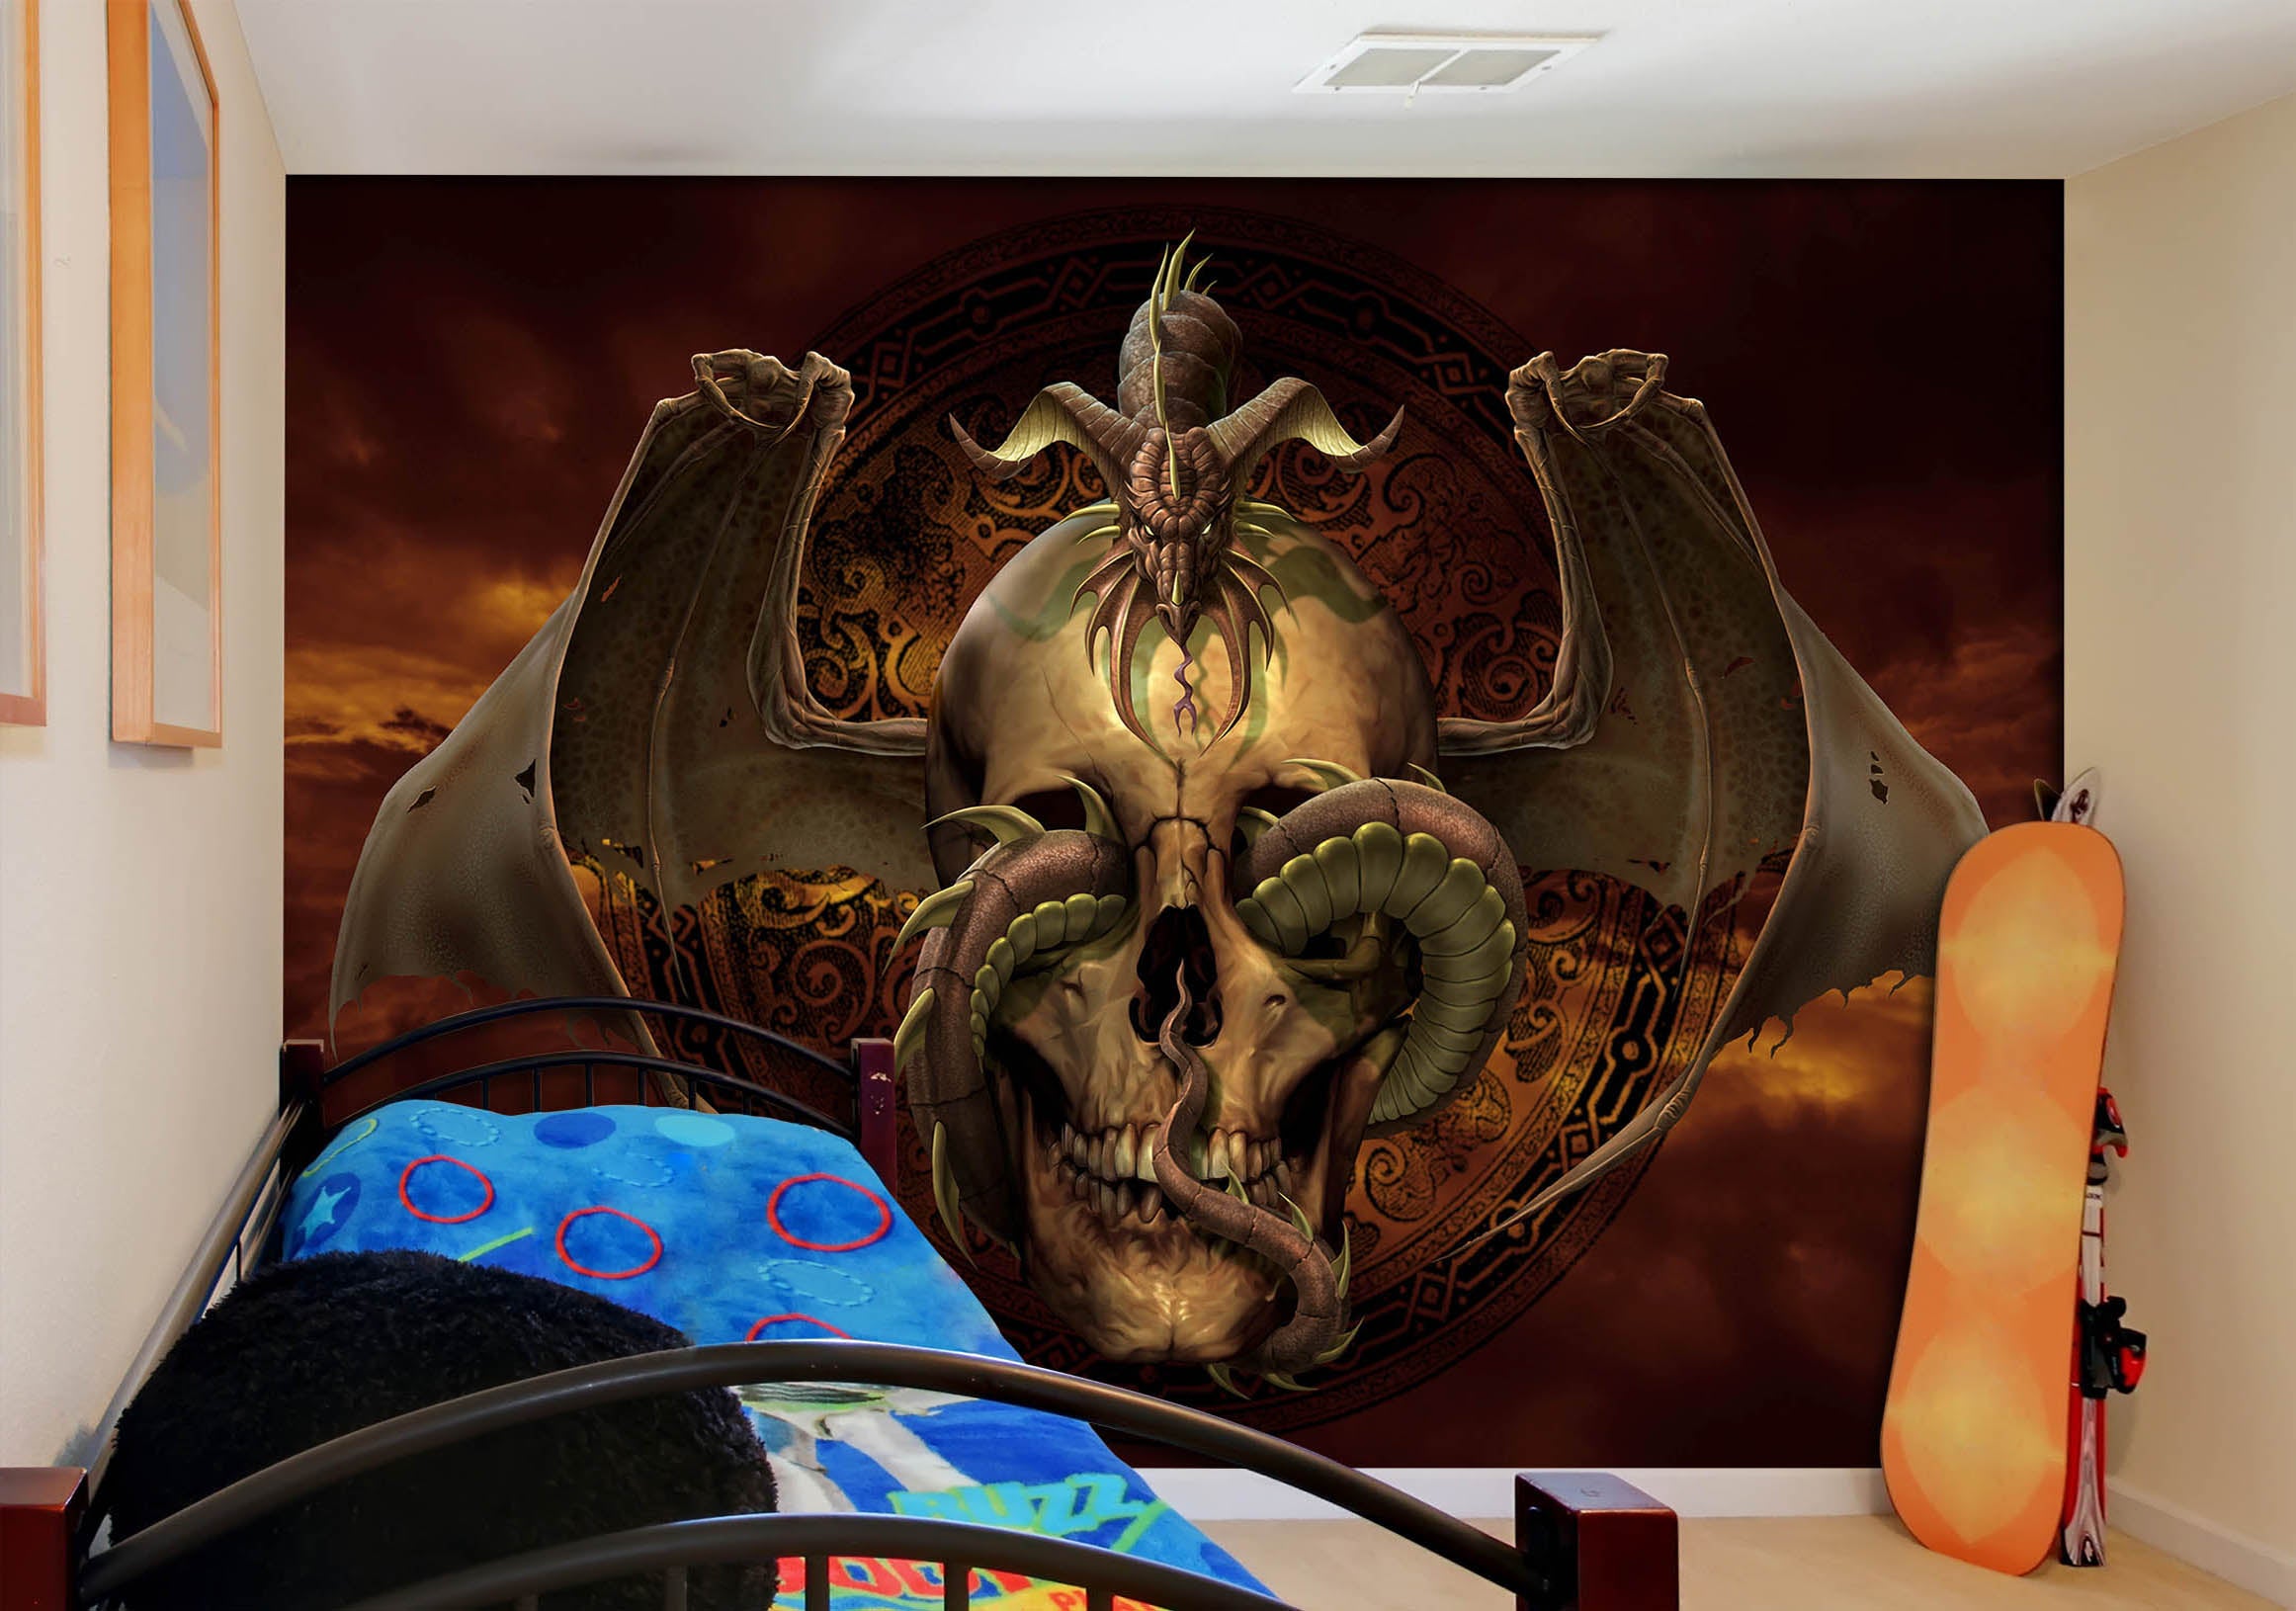 3D Skull Dragon 5003 Tom Wood Wall Mural Wall Murals